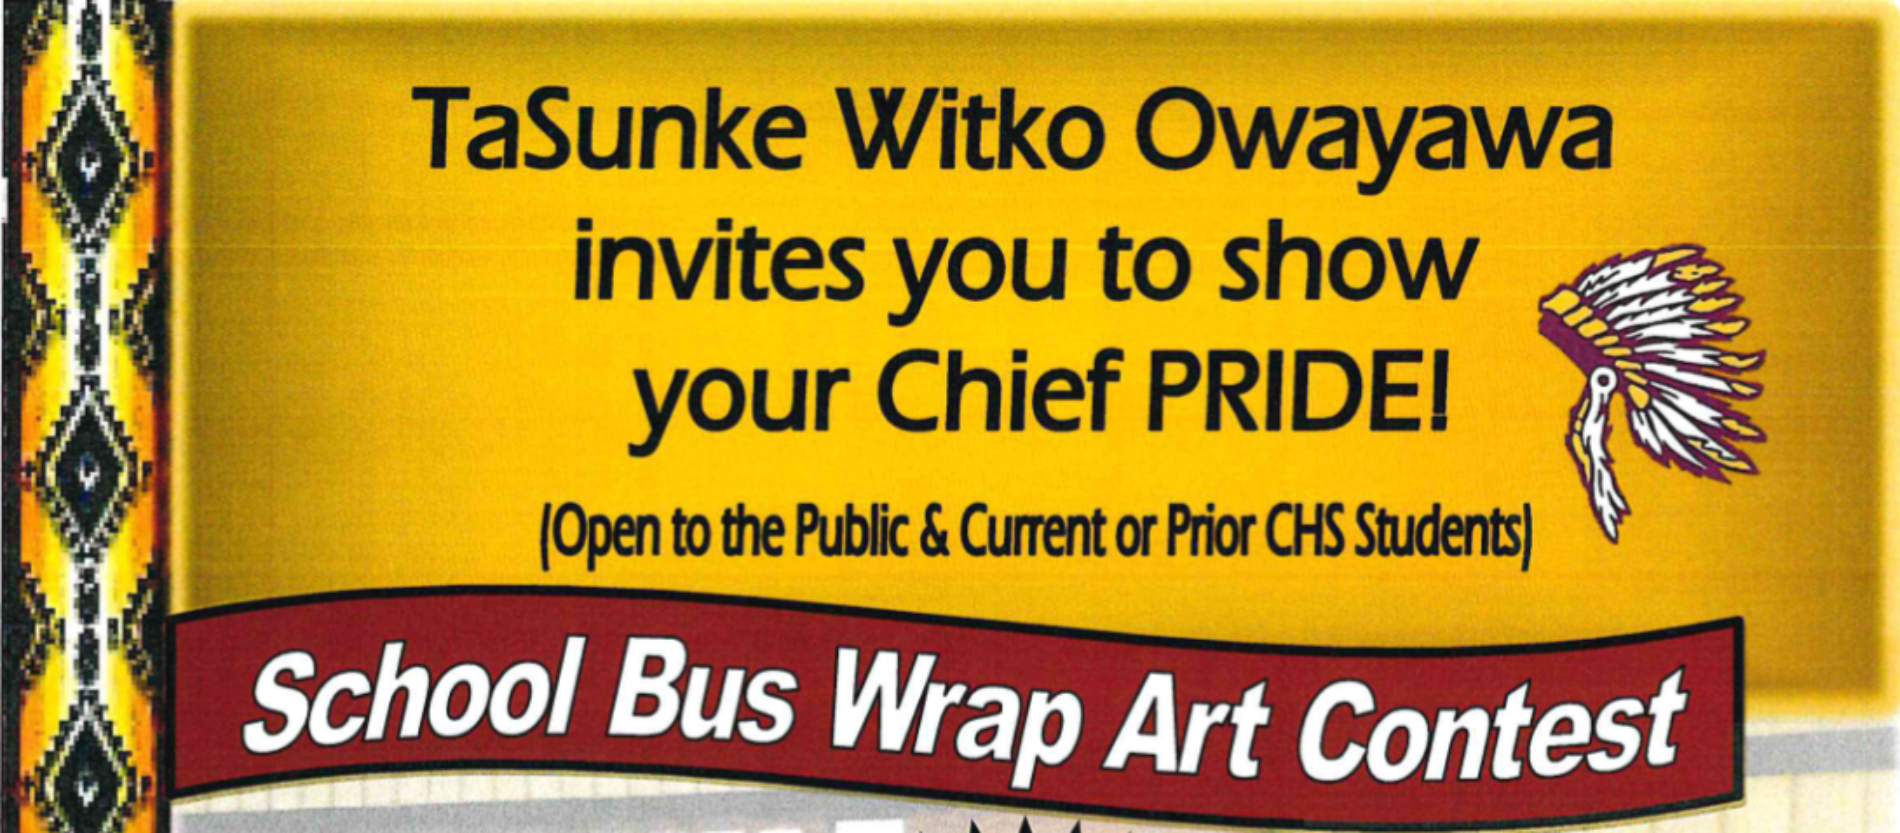 TaSunke Witko Owayawa invites you to show your Chief pride. School Bus Wrap Art Contest